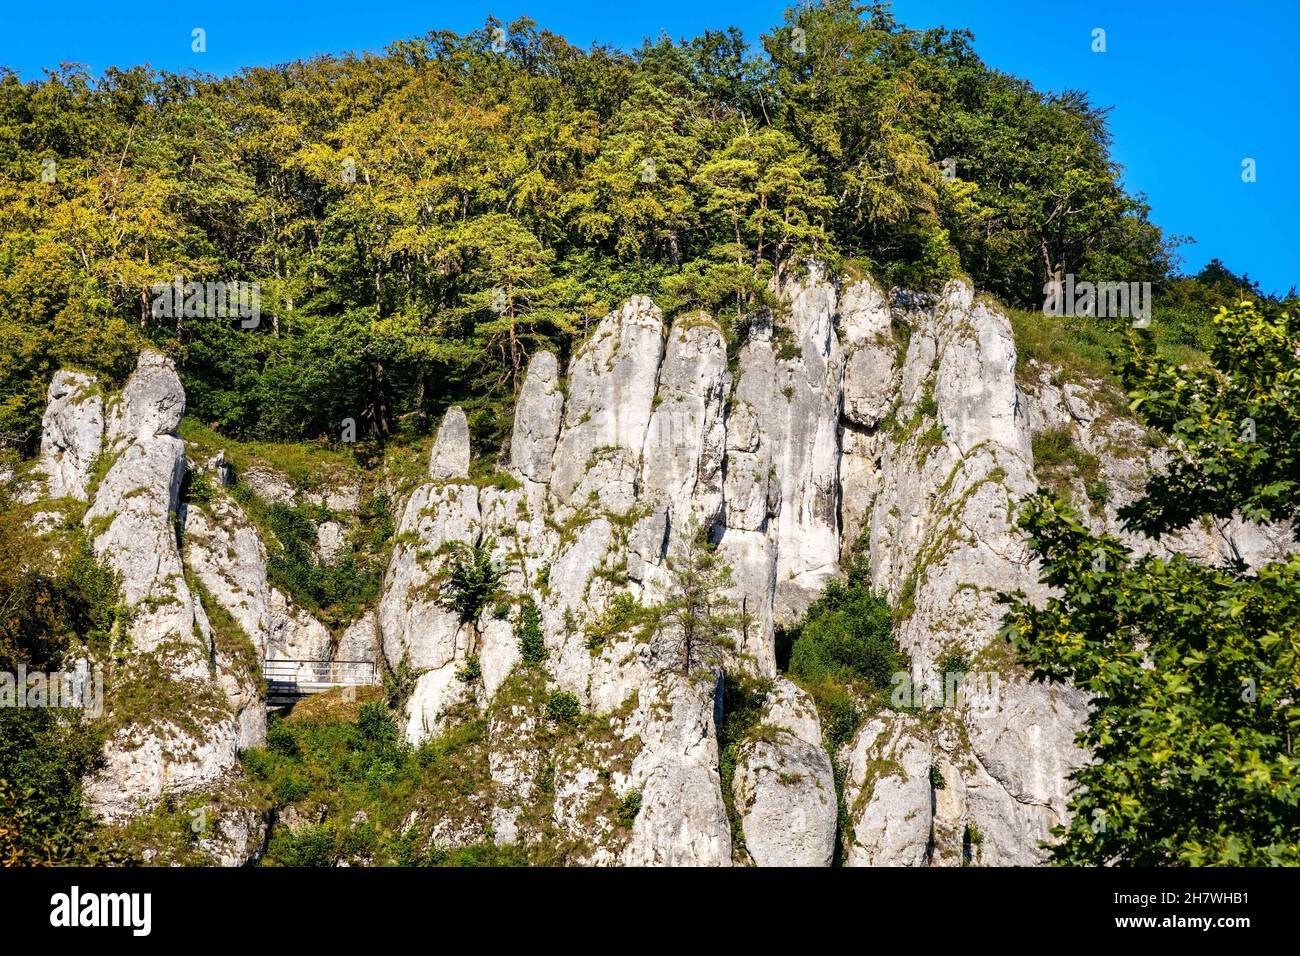 Crown rocks - Skaly Koronne - Jurassic limestone mountain massif with Glove  Rock - Rekawica - in Pradnik creek valley of Cracow-Czestochowa upland in  Stock Photo - Alamy